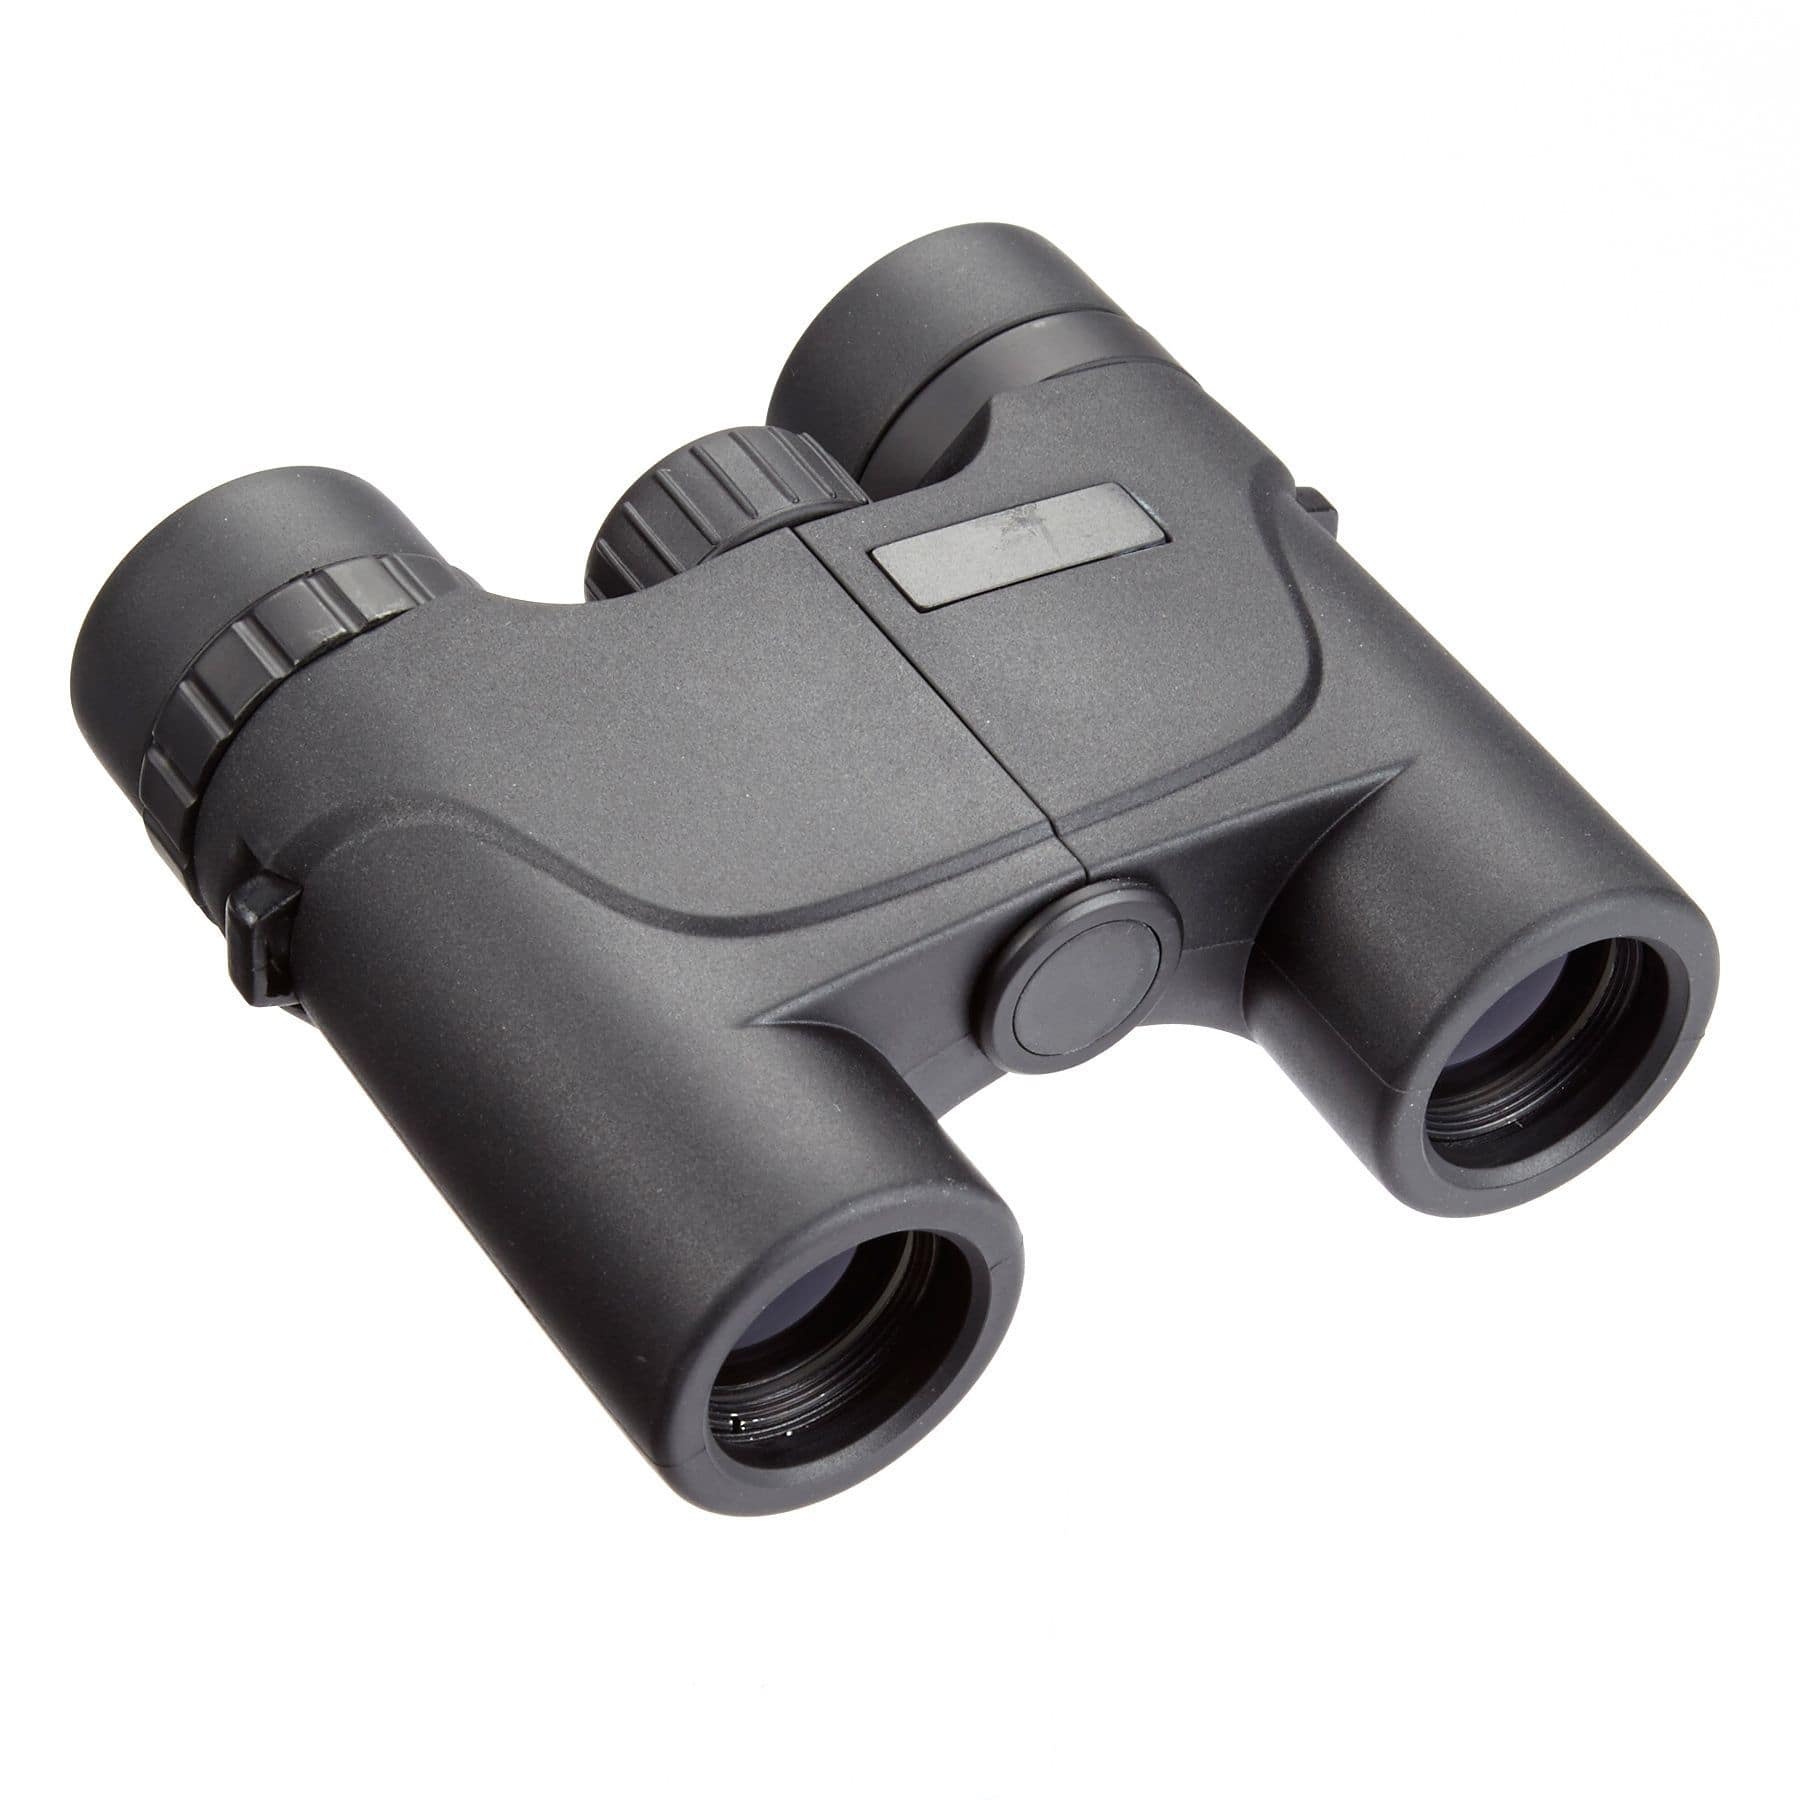 Outbound Zoom Porro Prism Binoculars w/ Carry Case, Cloth & StraPs